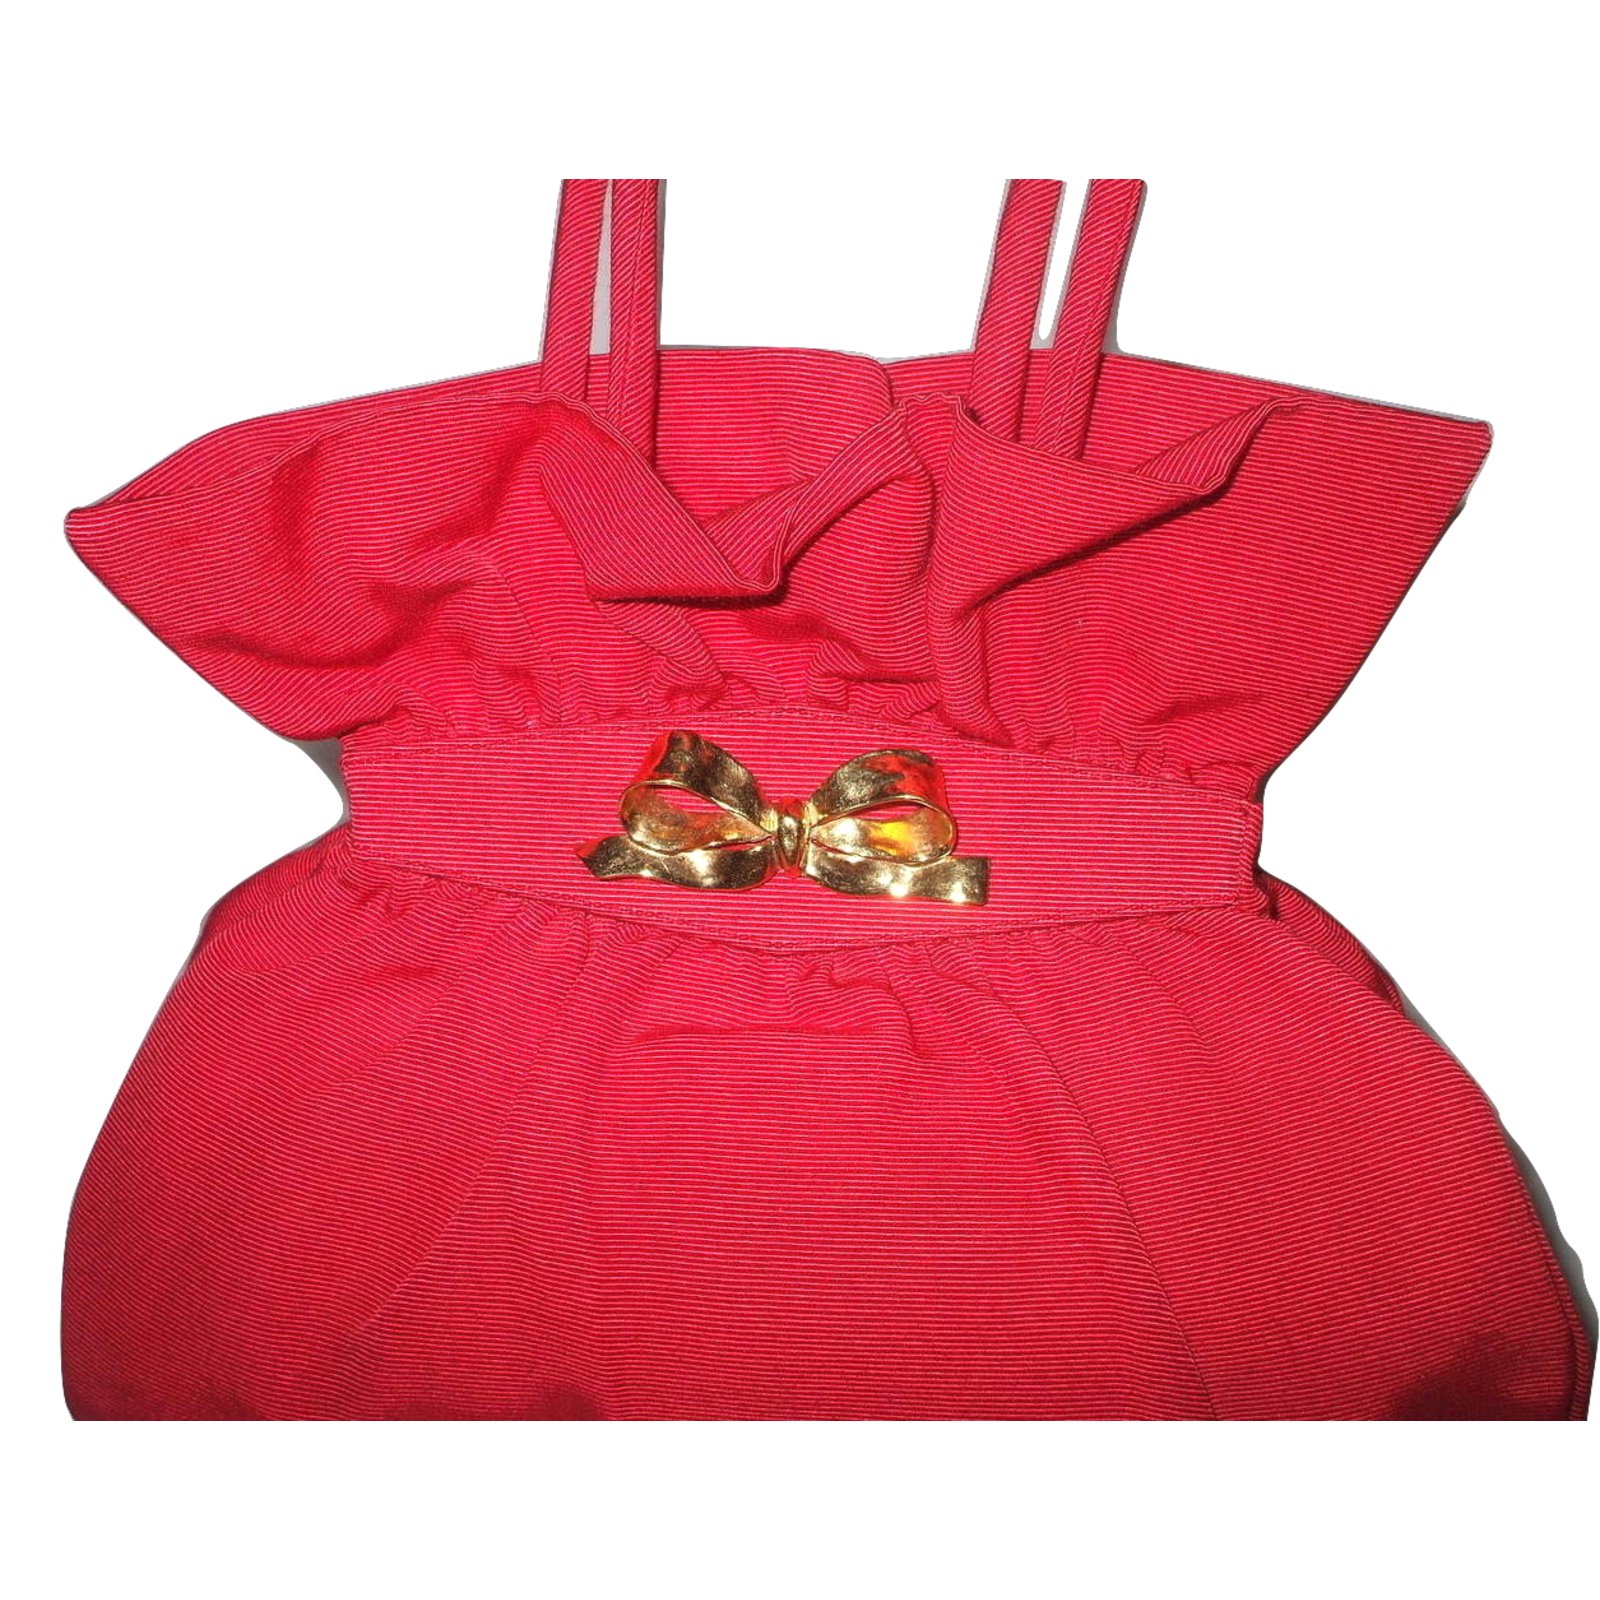 ysl red cloth handbag  